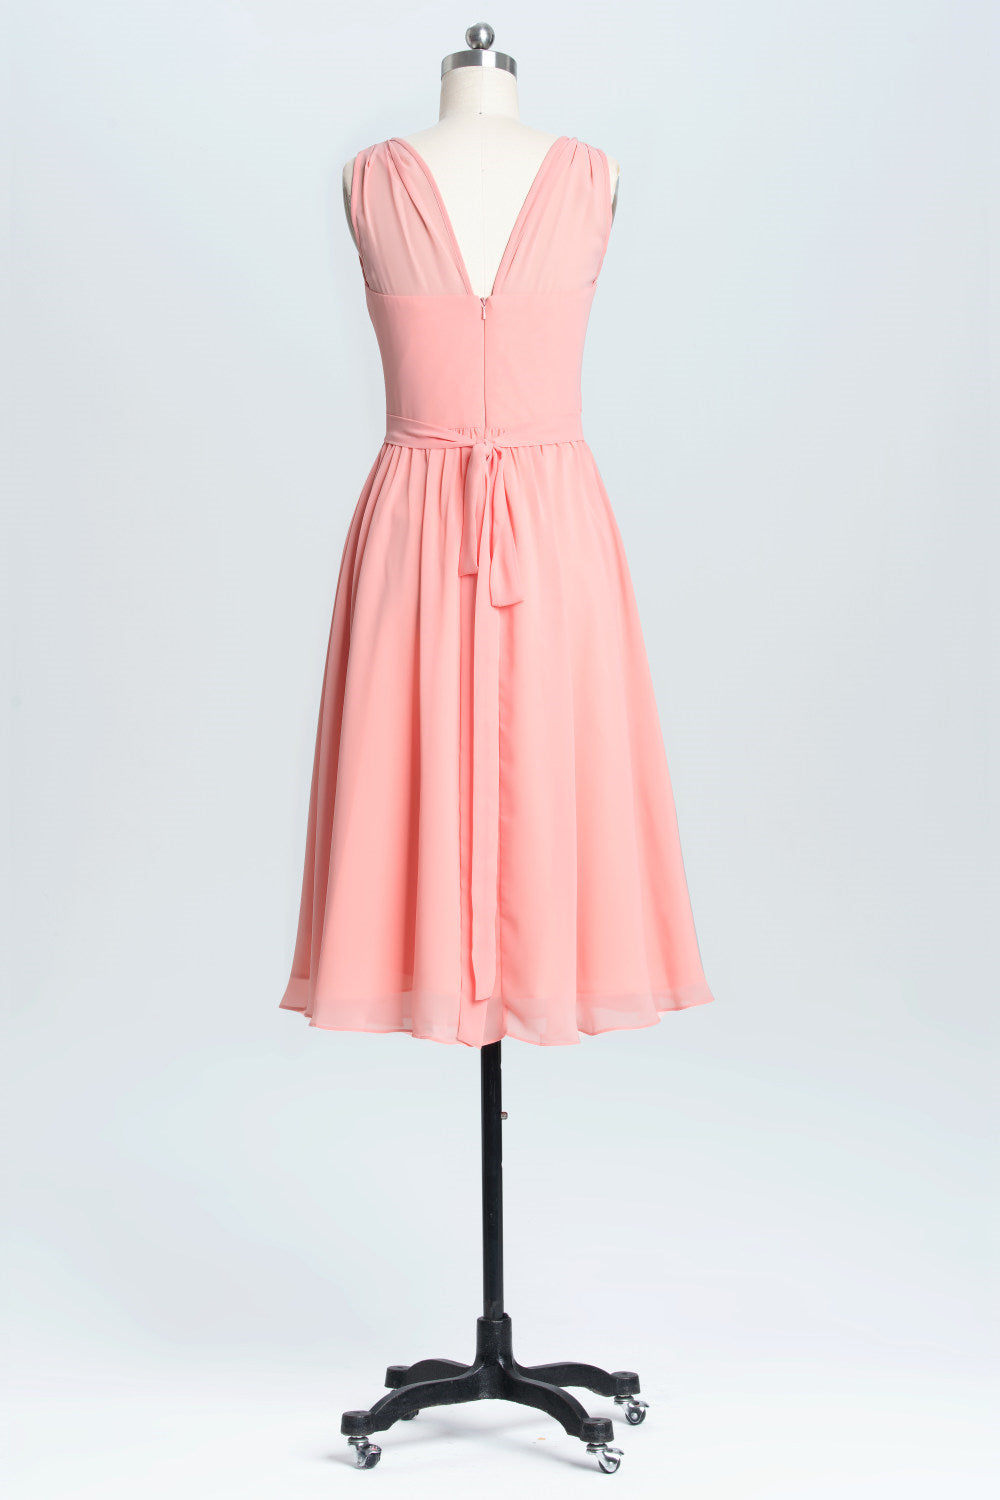 Aesthetic Dress, Simple Coral A-line Short Chiffon Dress